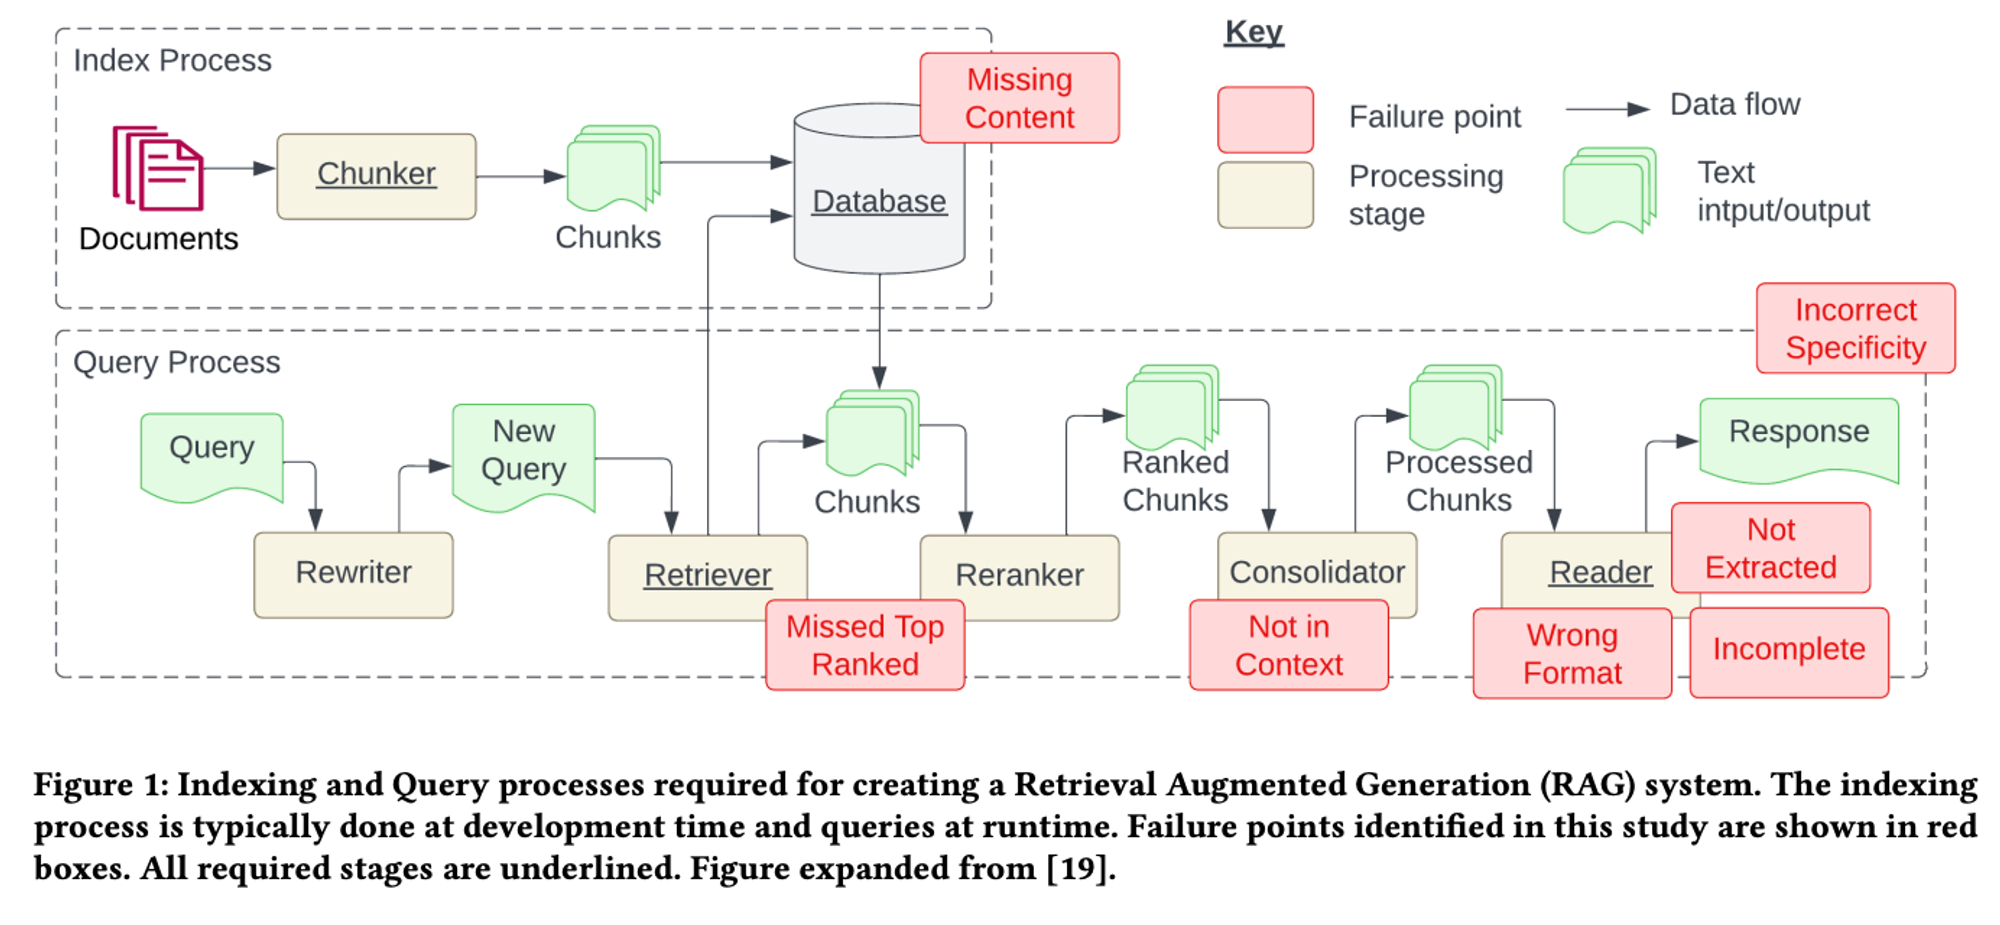 Barnett, Scott, et al. "Seven failure points when engineering a retrieval augmented generation system." arXiv preprint arXiv:2401.05856 (2024).